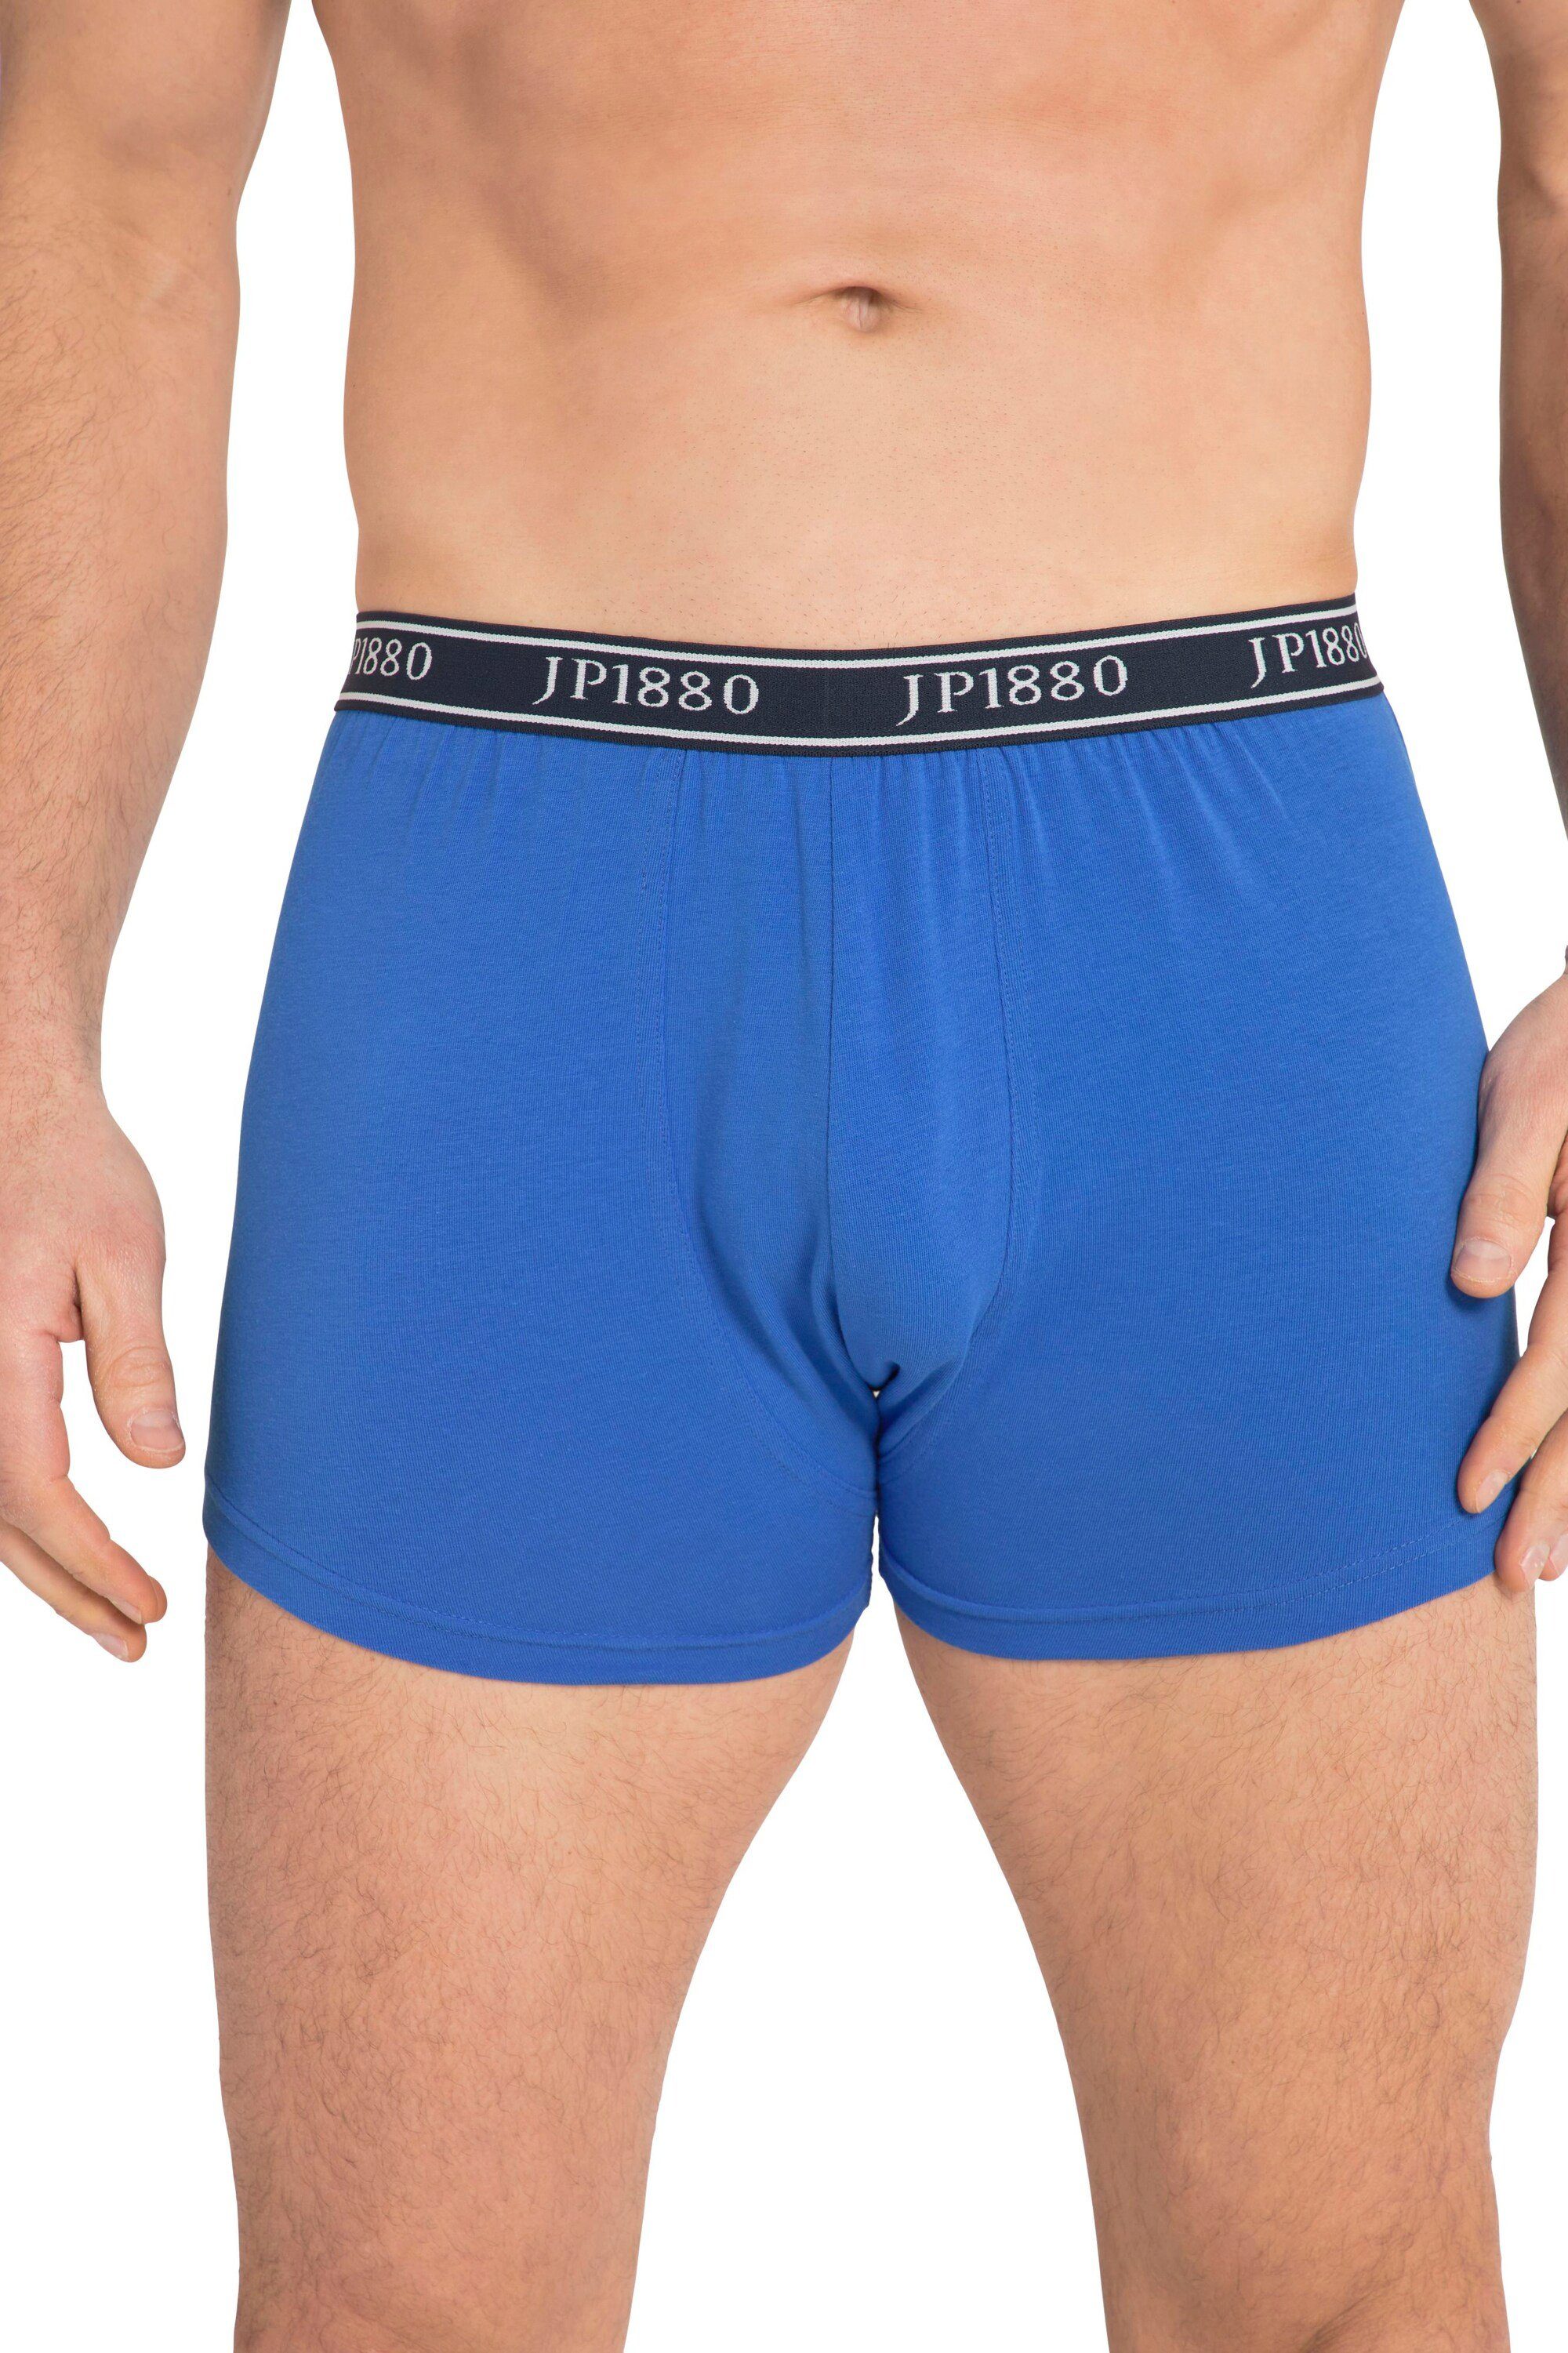 2er-Pack FLEXNAMIC® JP1880 Hip-Pants Boxershorts Unterhose